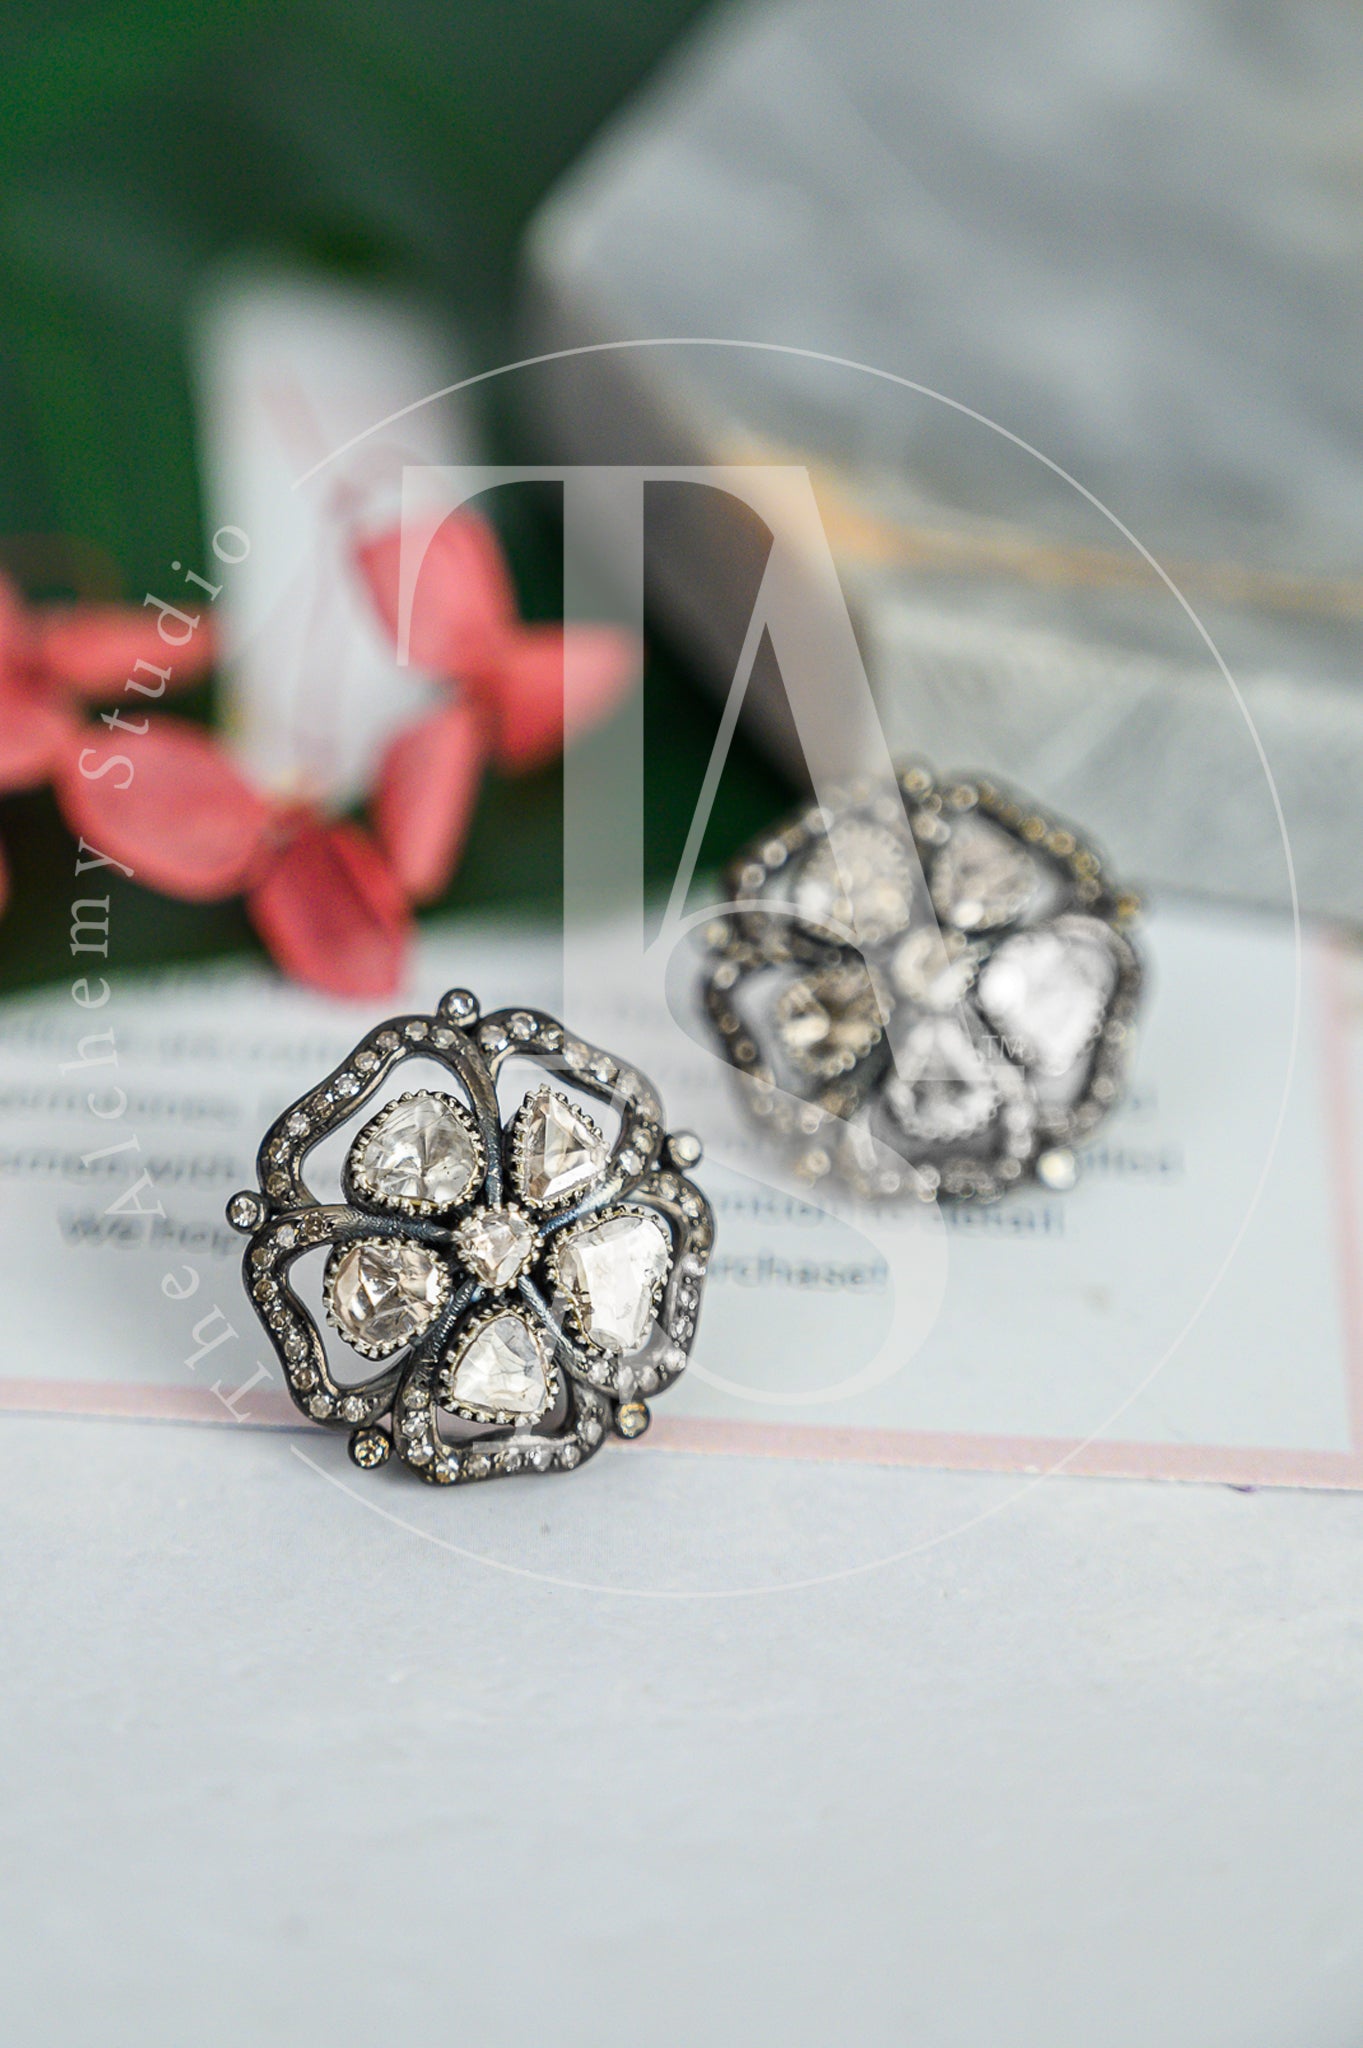 Share more than 85 rose cut diamond stud earrings super hot - 3tdesign ...